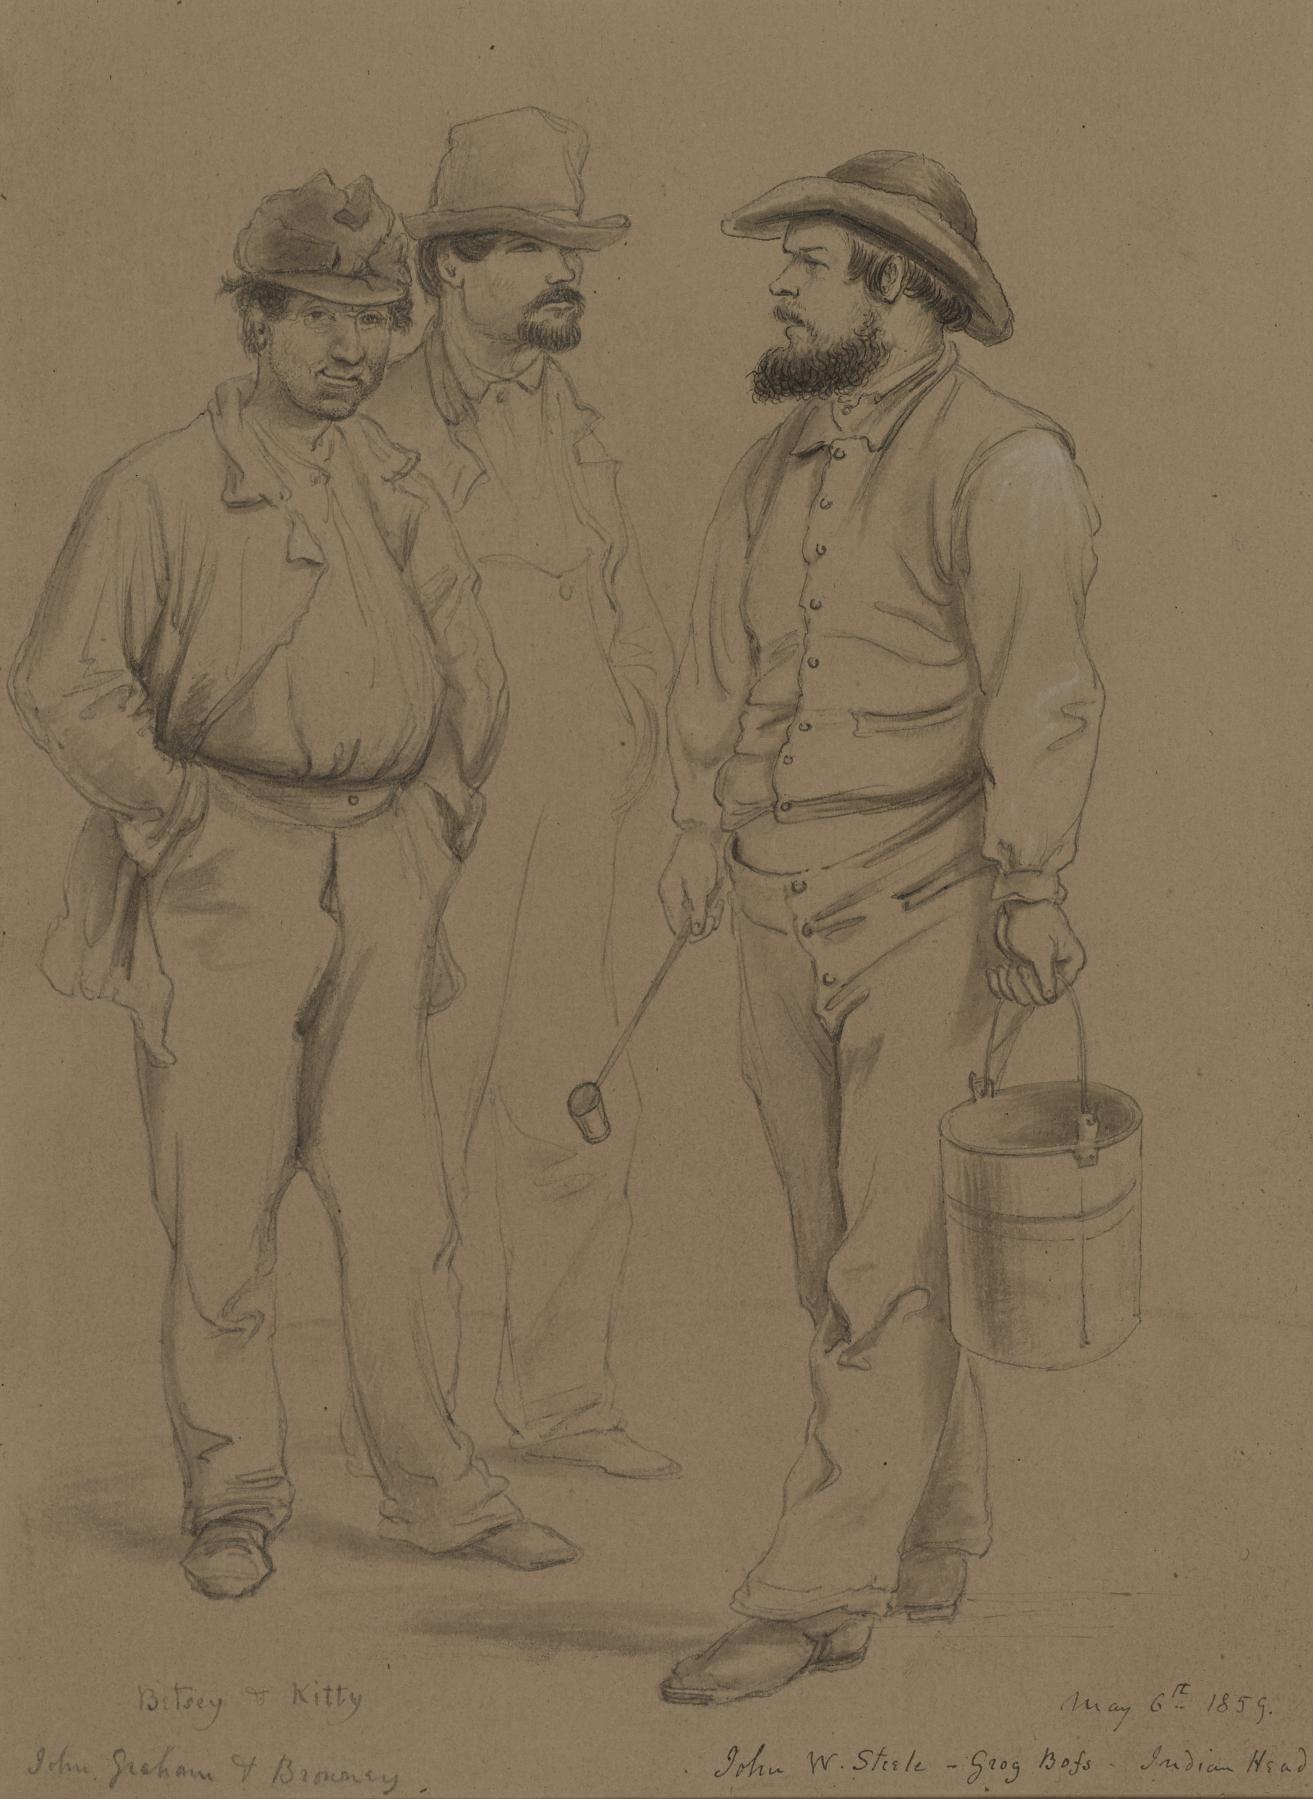 Image for Three Men